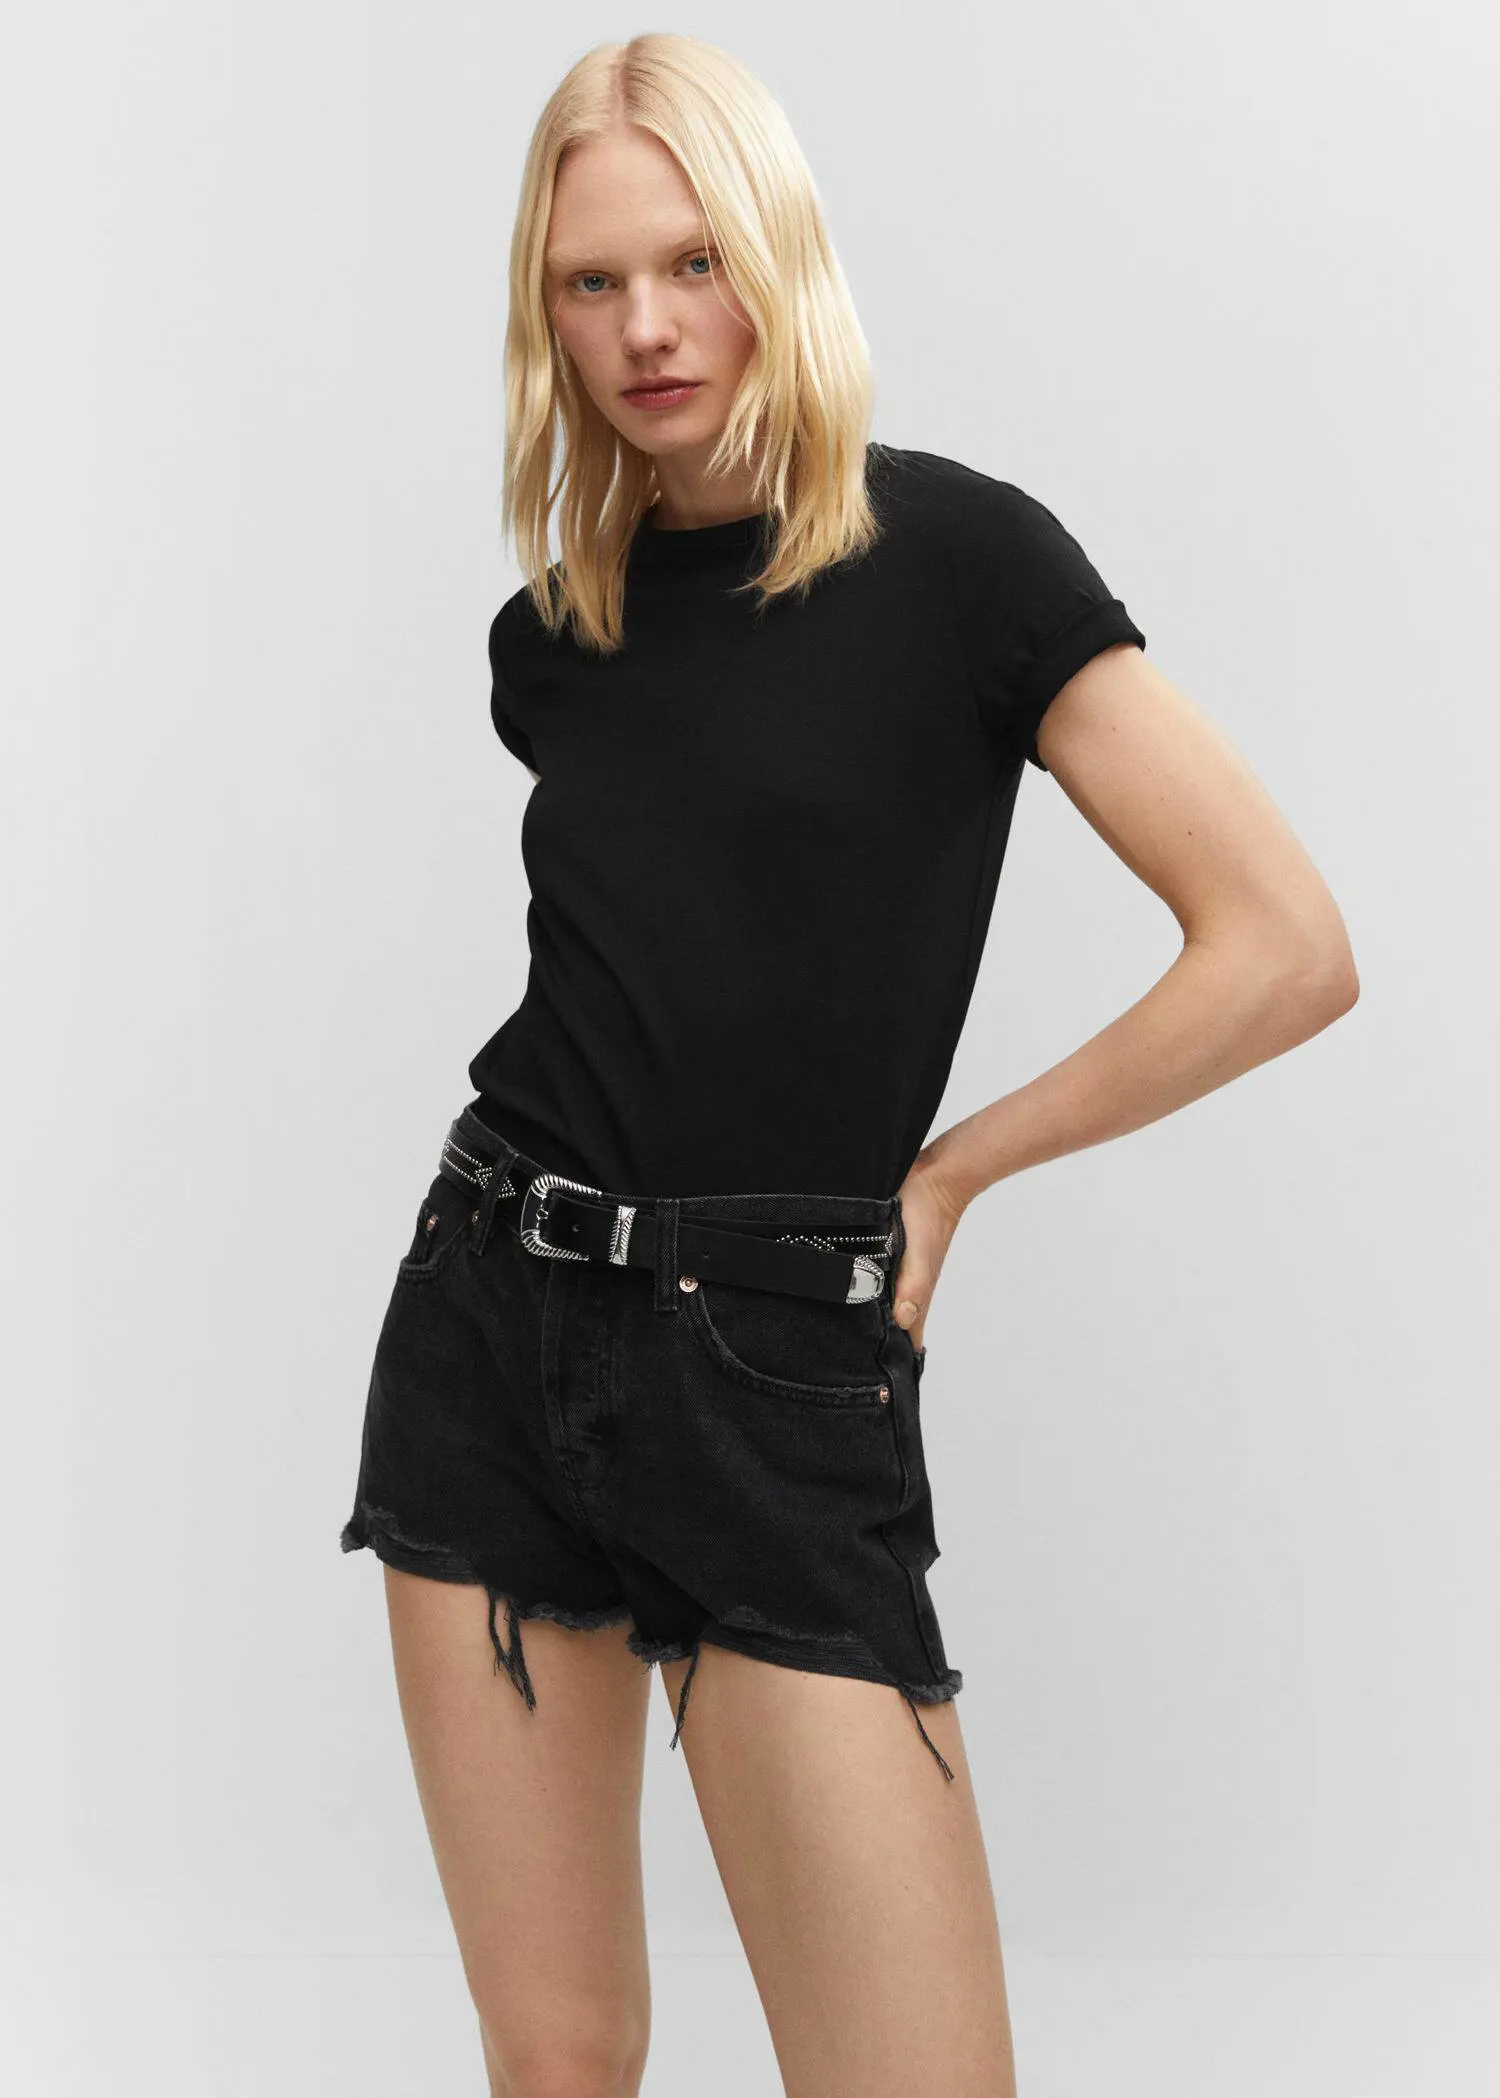 Mango 100% cotton T-shirt. a woman in black shirt and black shorts. 